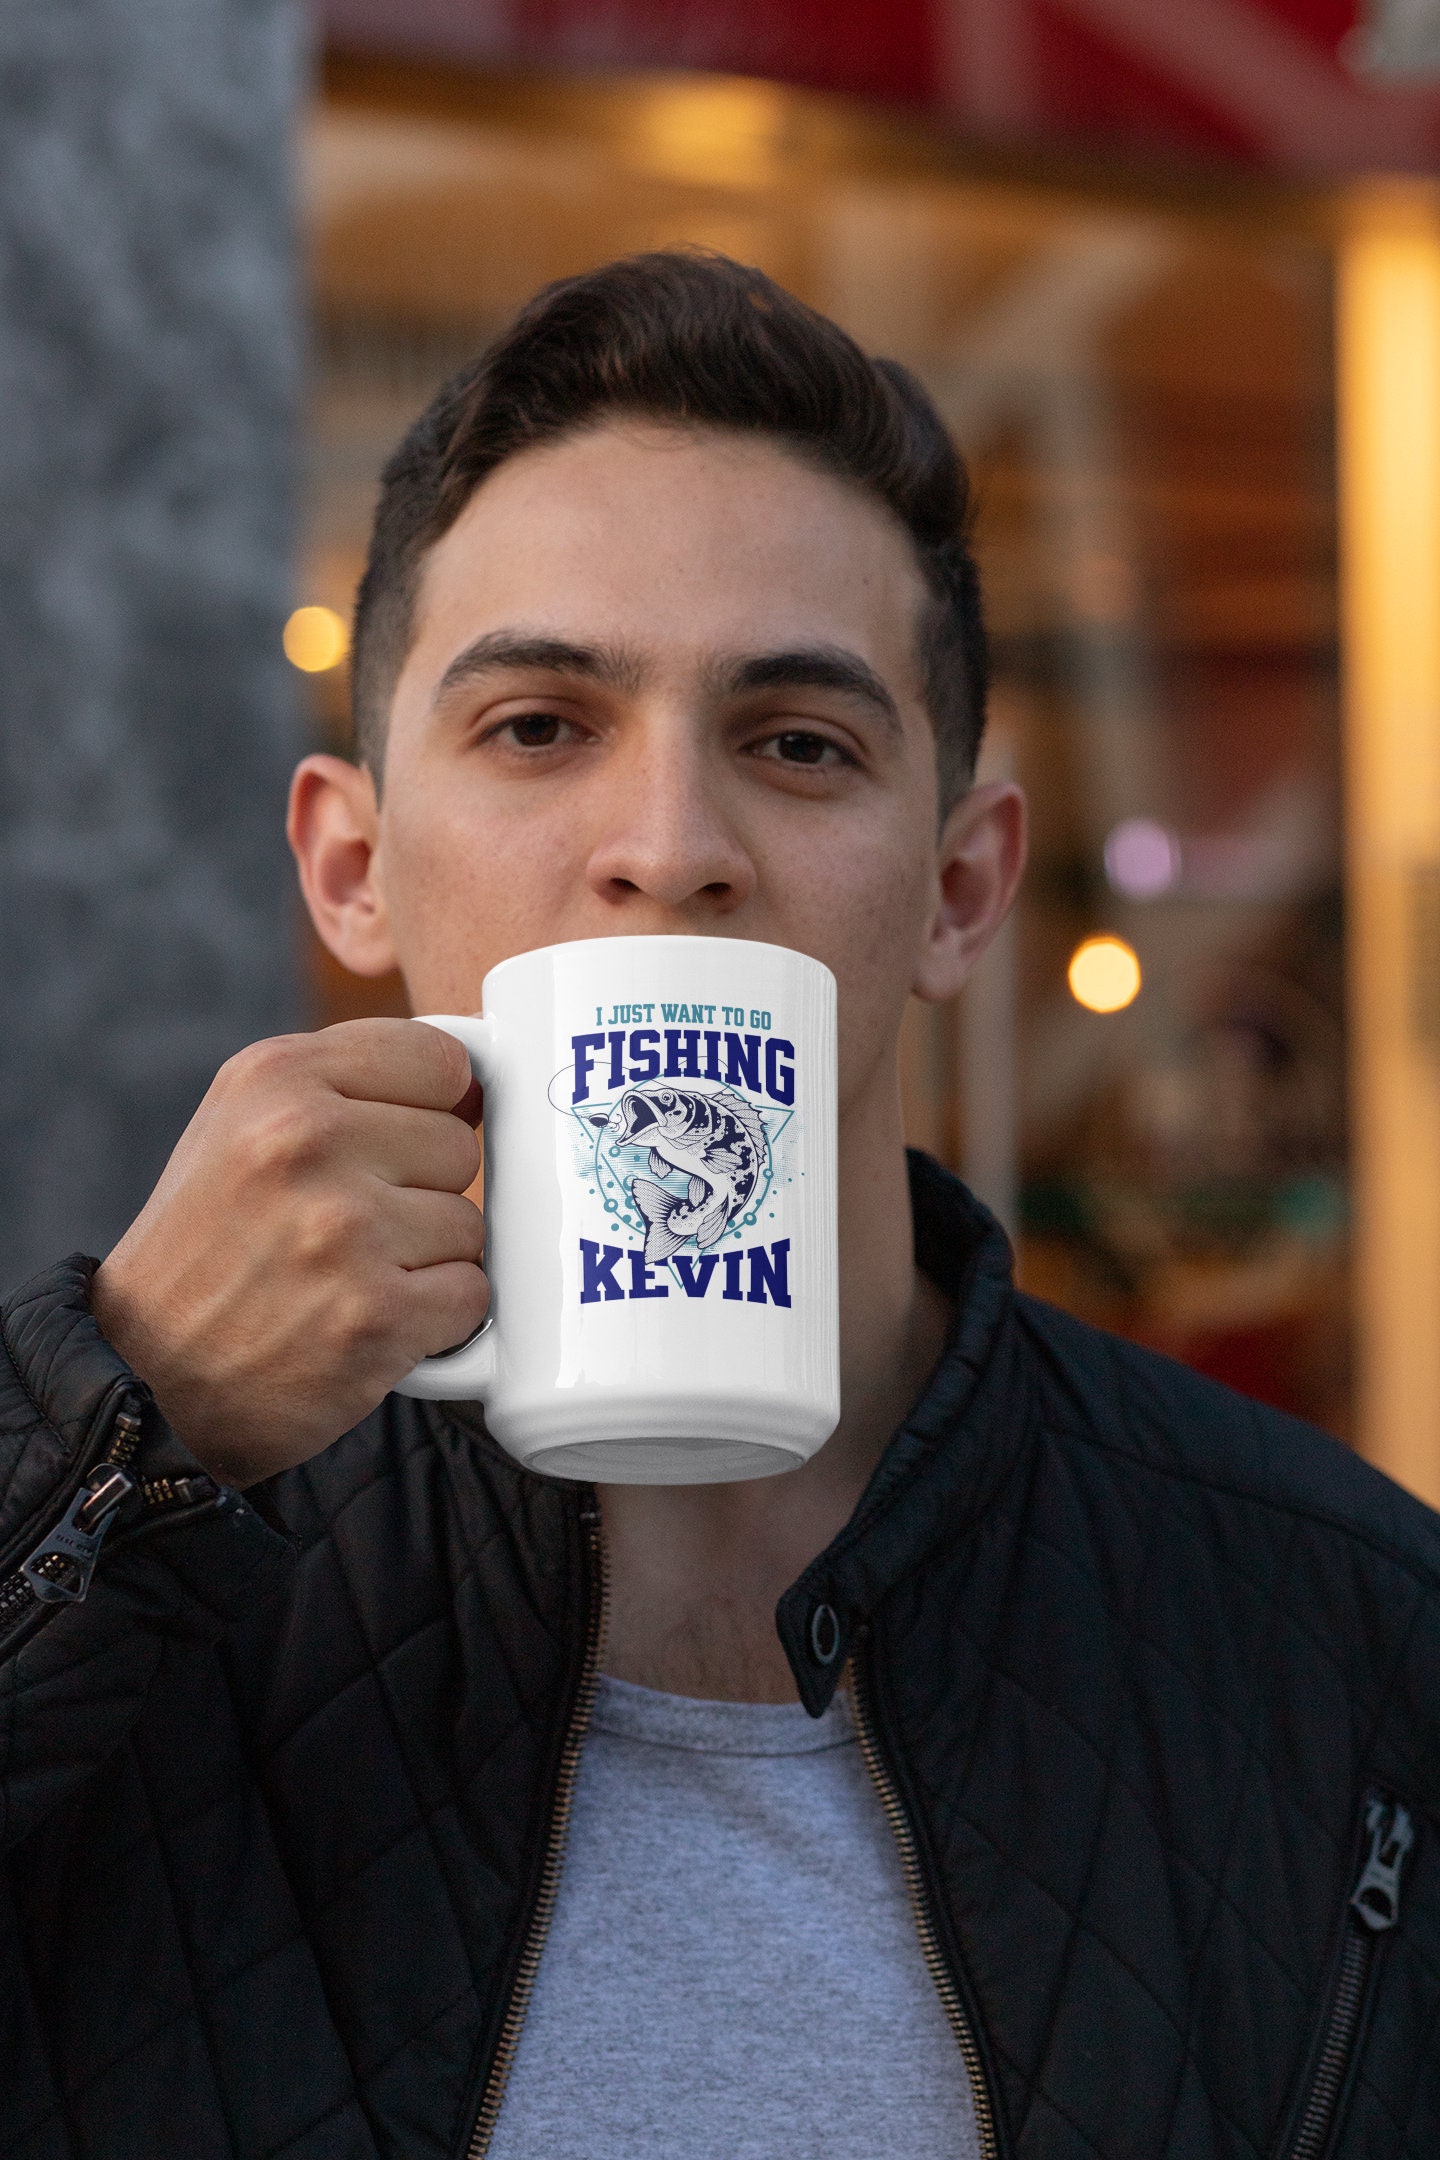 Fisherman Gift, Bass Fishing Ceramic Coffee Mug